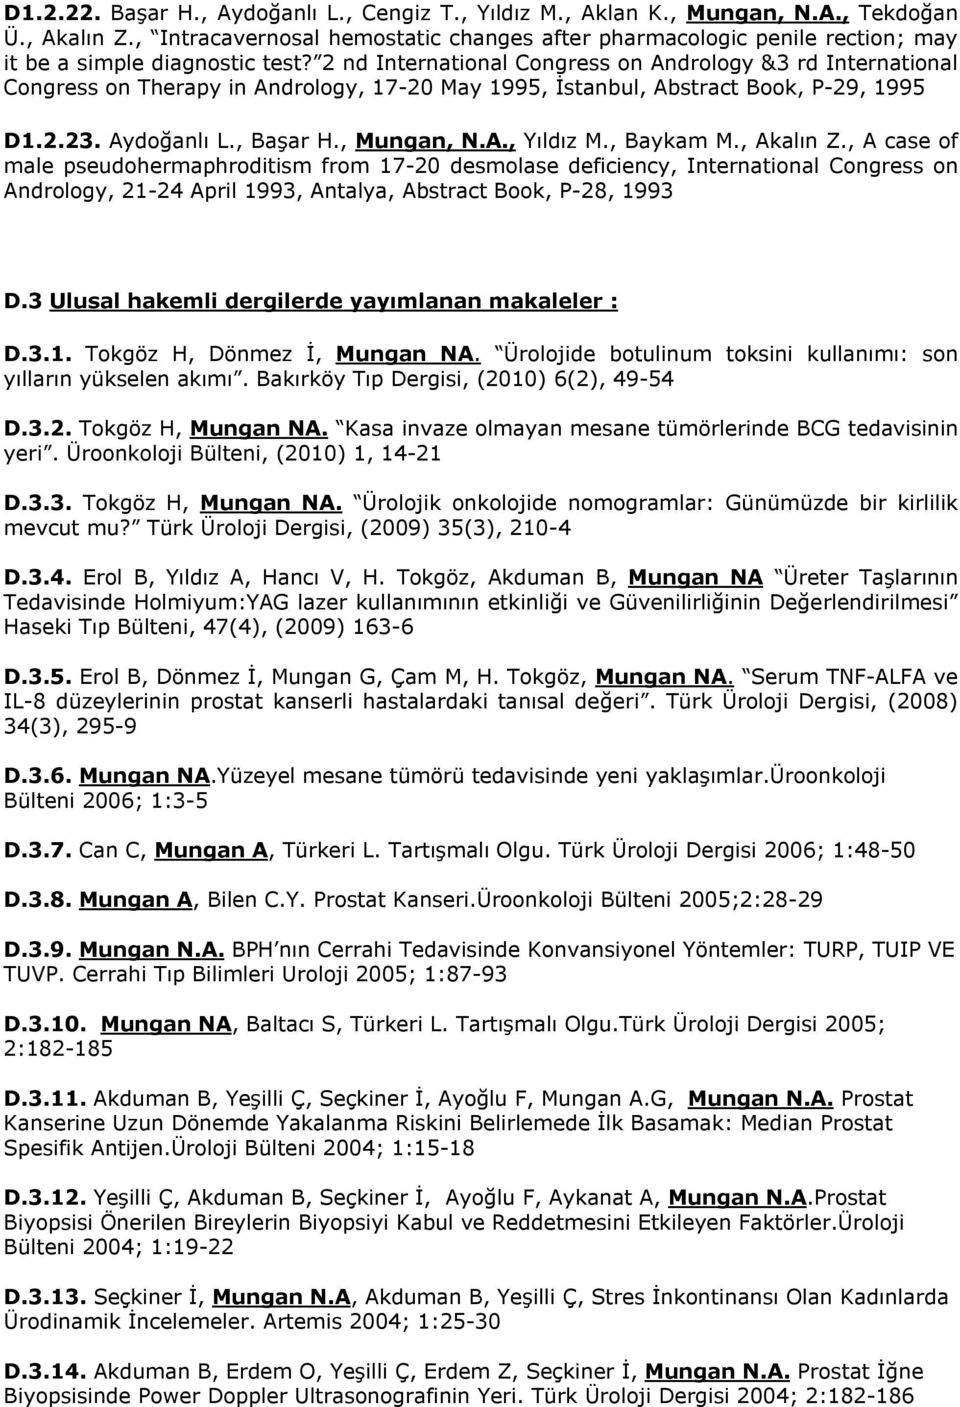 2 nd International Congress on Andrology &3 rd International Congress on Therapy in Andrology, 17-20 May 1995, İstanbul, Abstract Book, P-29, 1995 D1.2.23. Aydoğanlı L., Başar H., Mungan, N.A., Yıldız M.